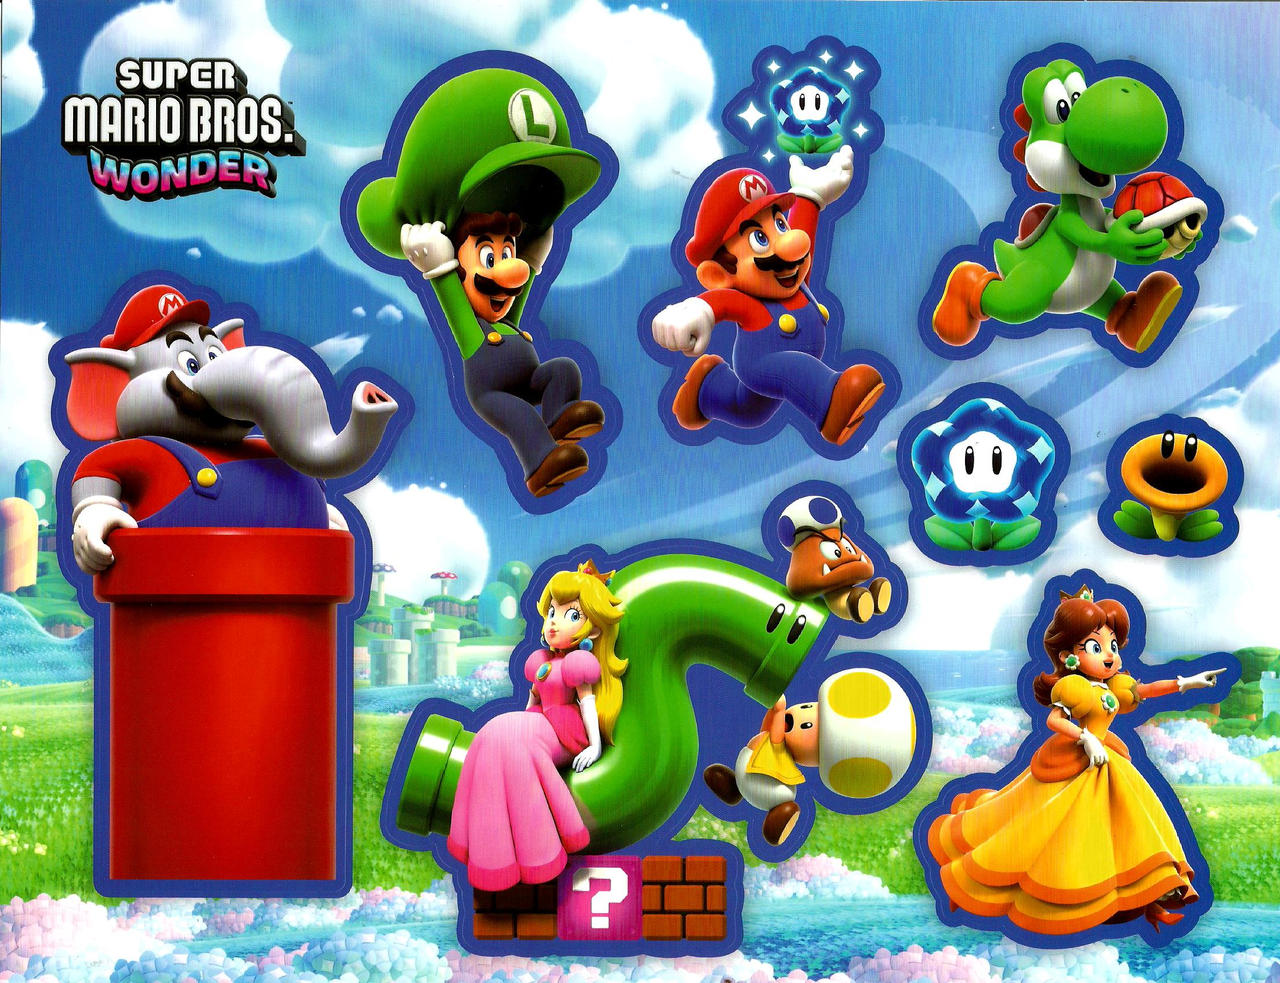 Super Mario Bros. Wonder has me WONDERING…